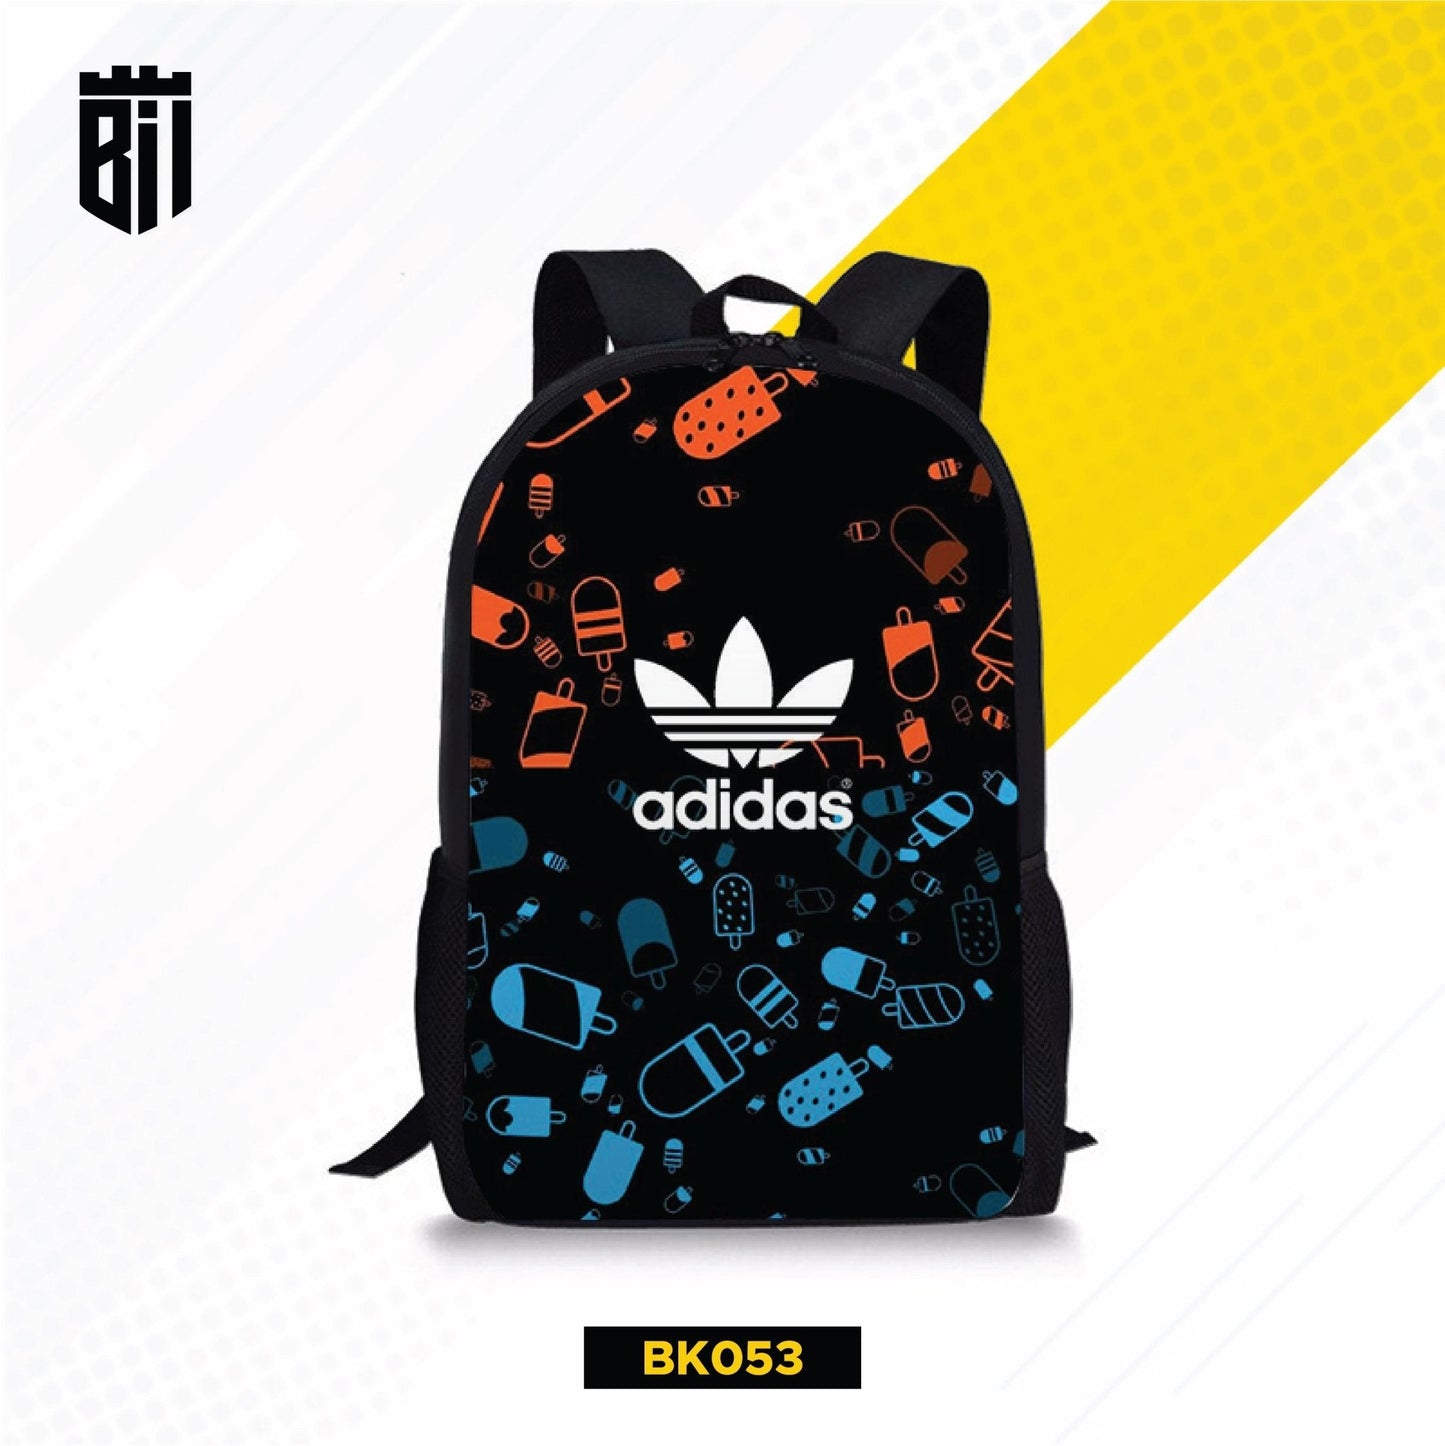 BK053 Adidas Backpack - BREACHIT